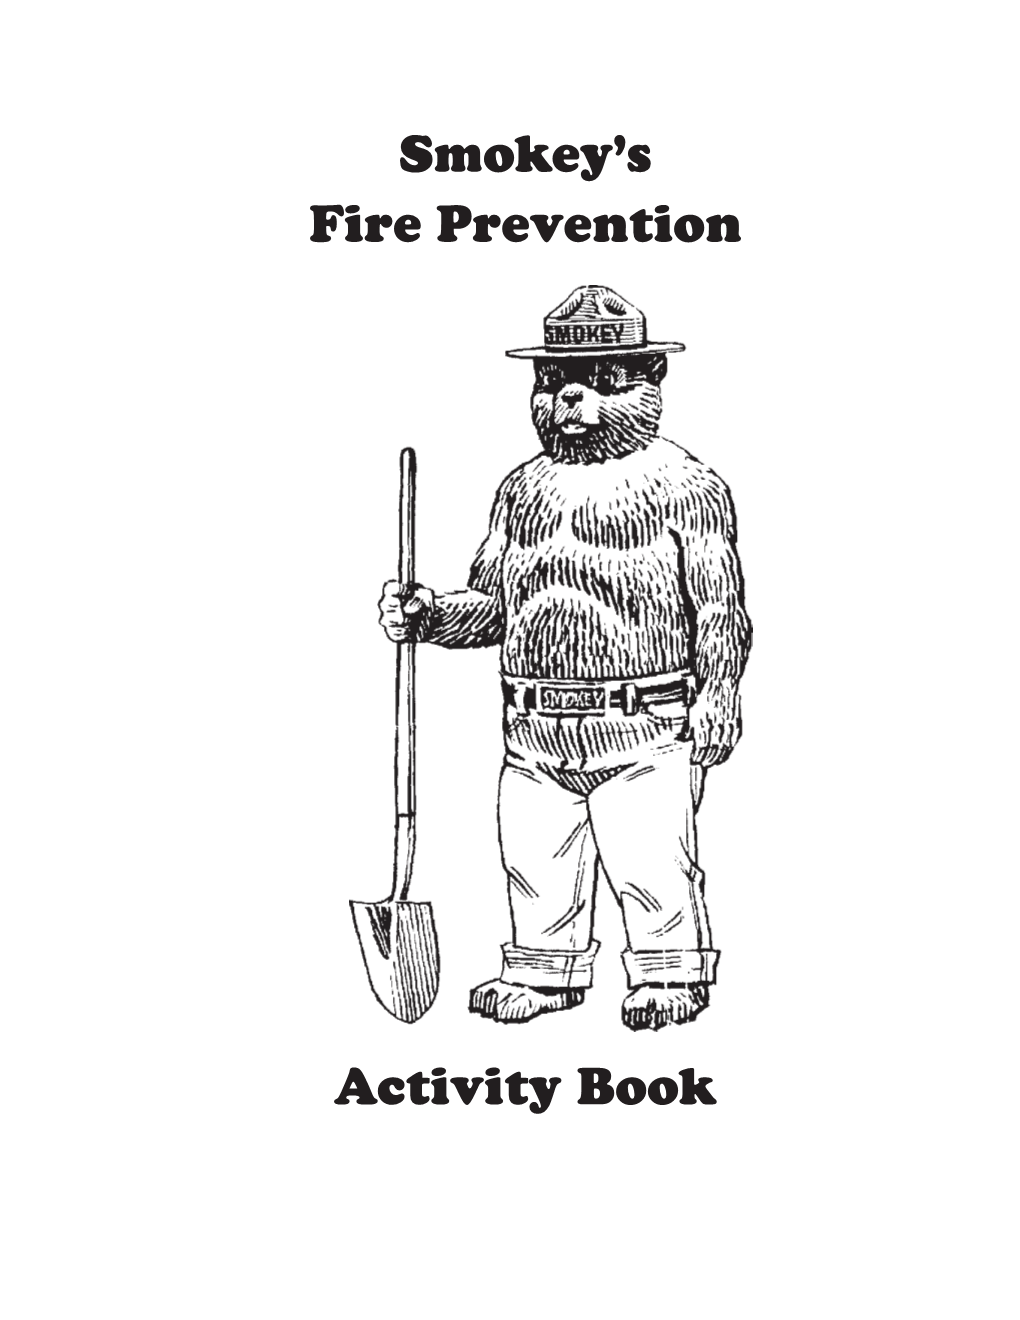 Smokey's Fire Prevention Activity Book